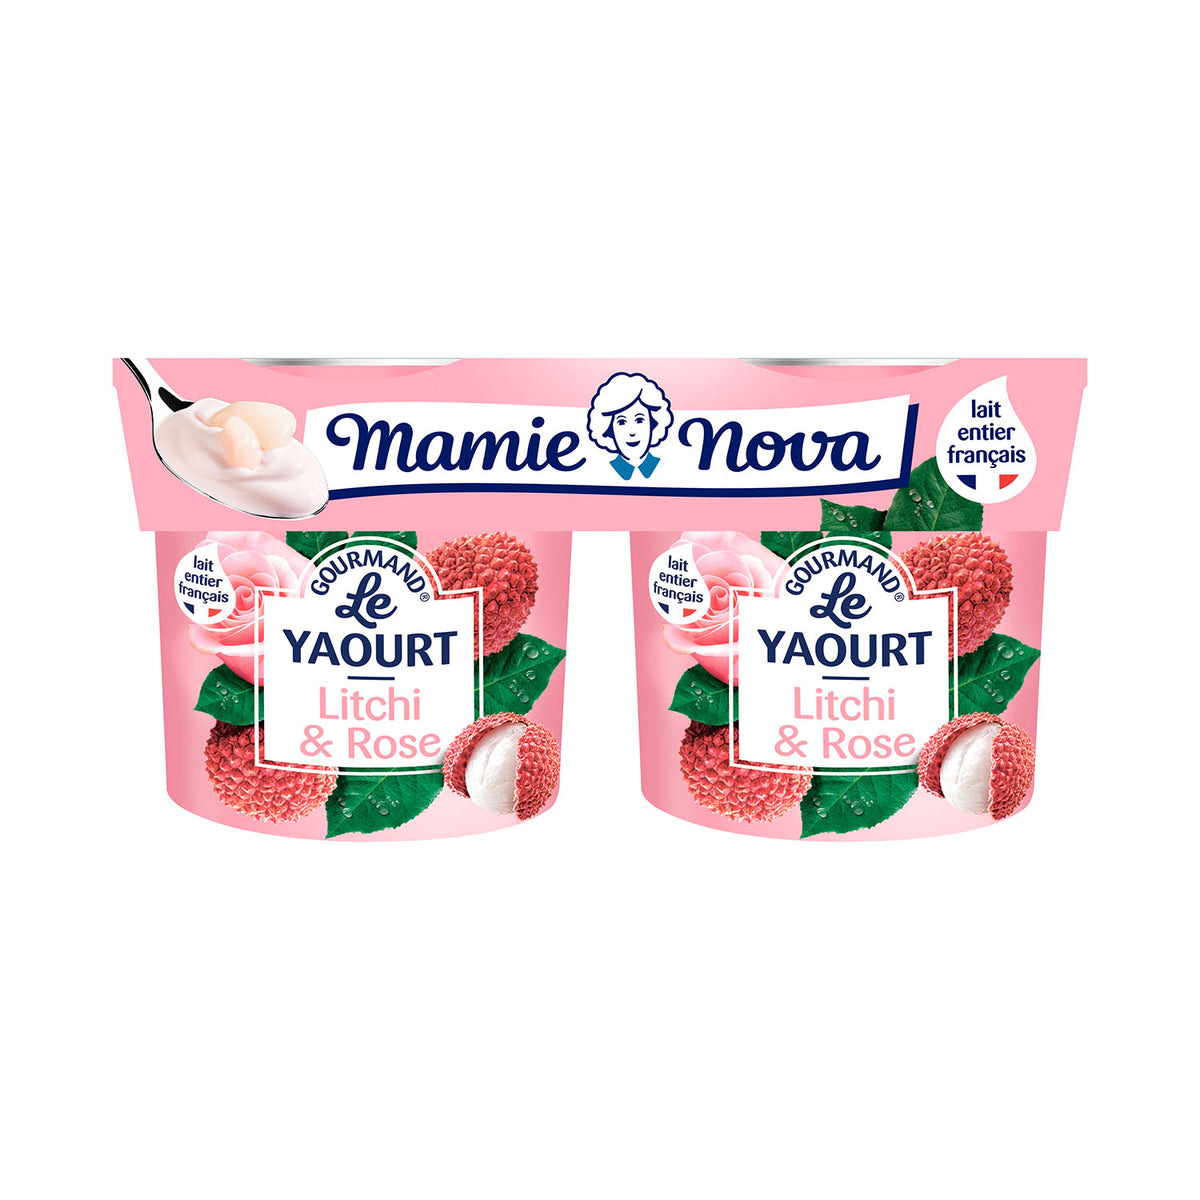 MAMIE NOVA Yoghurt with Red Fruits Pieces Editorial Stock Image - Image of  nova, desserts: 240716354